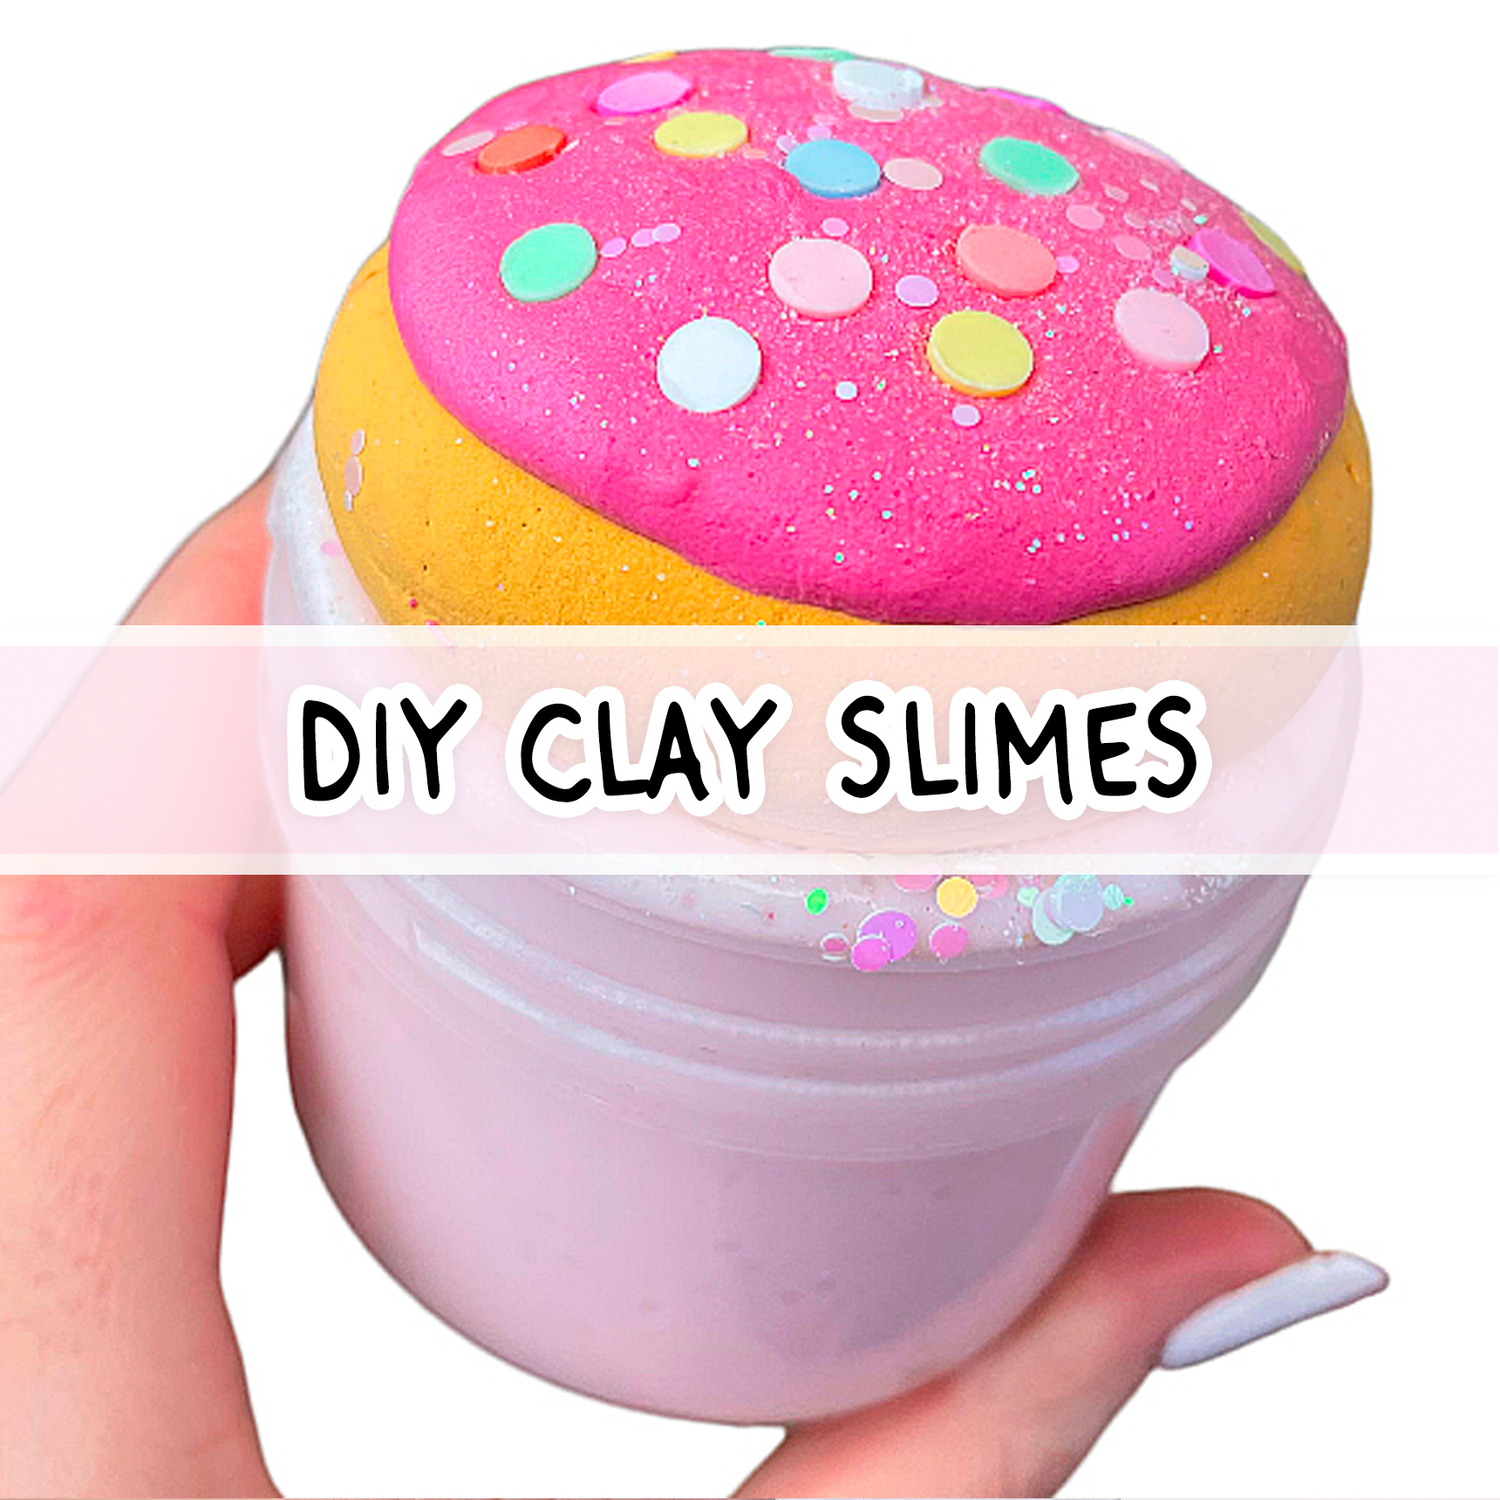 DIY Clay Slimes